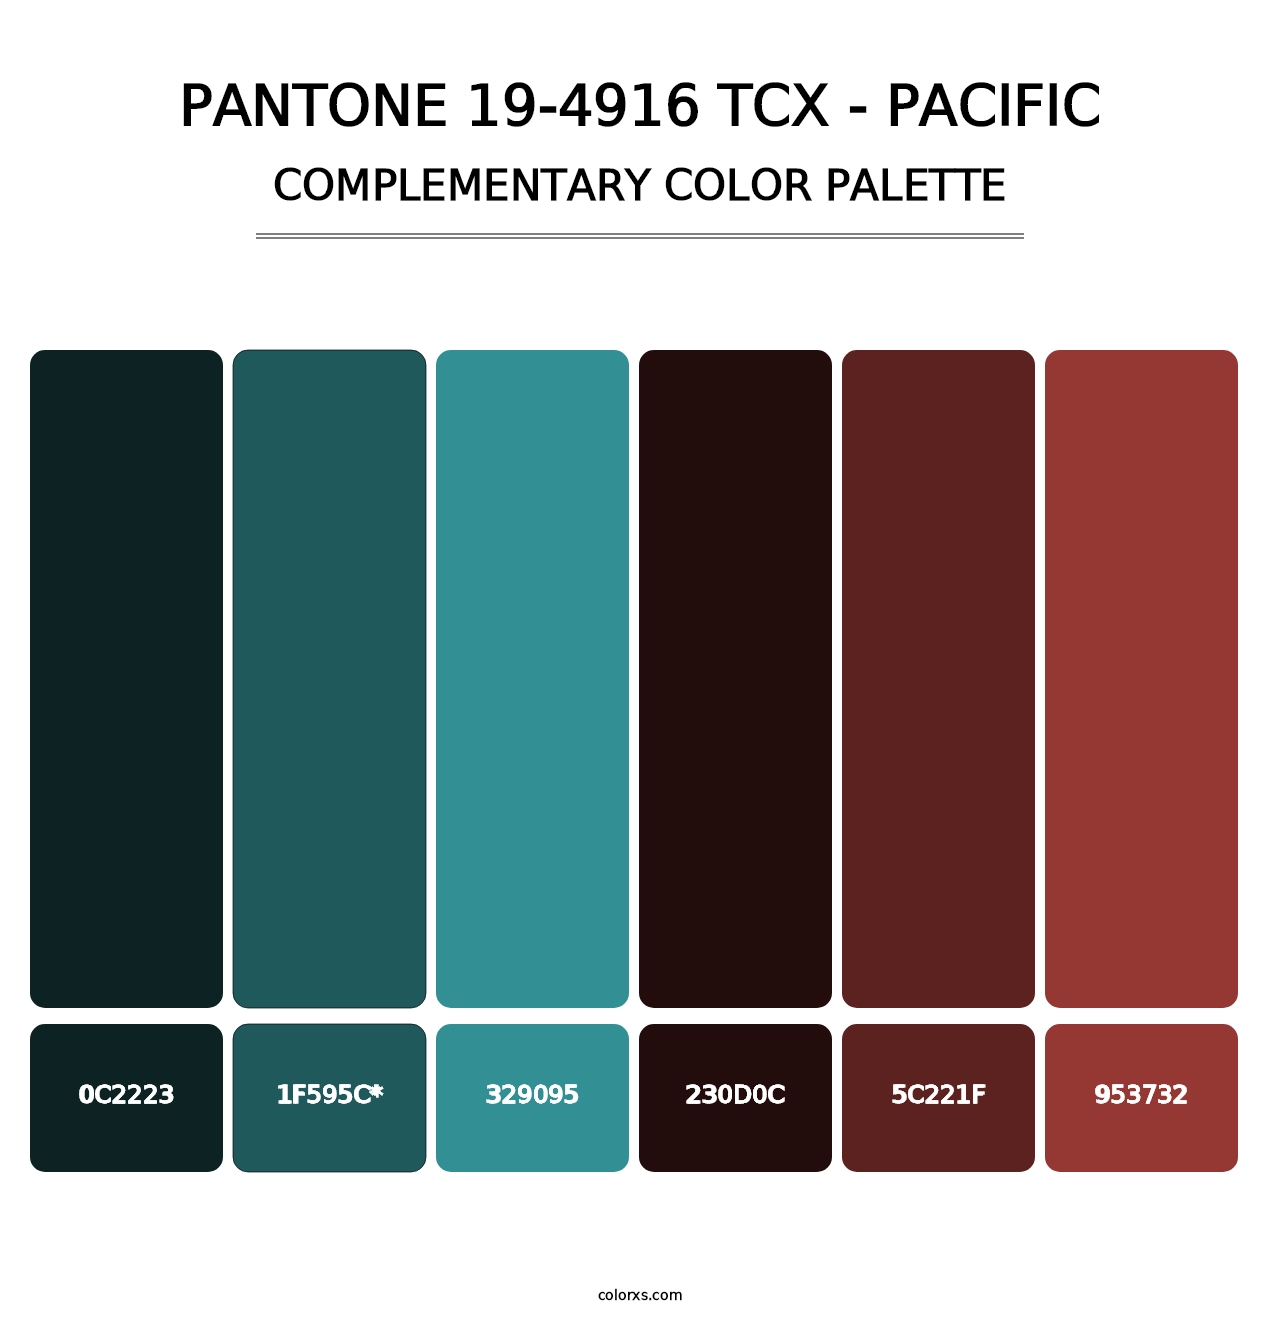 PANTONE 19-4916 TCX - Pacific - Complementary Color Palette